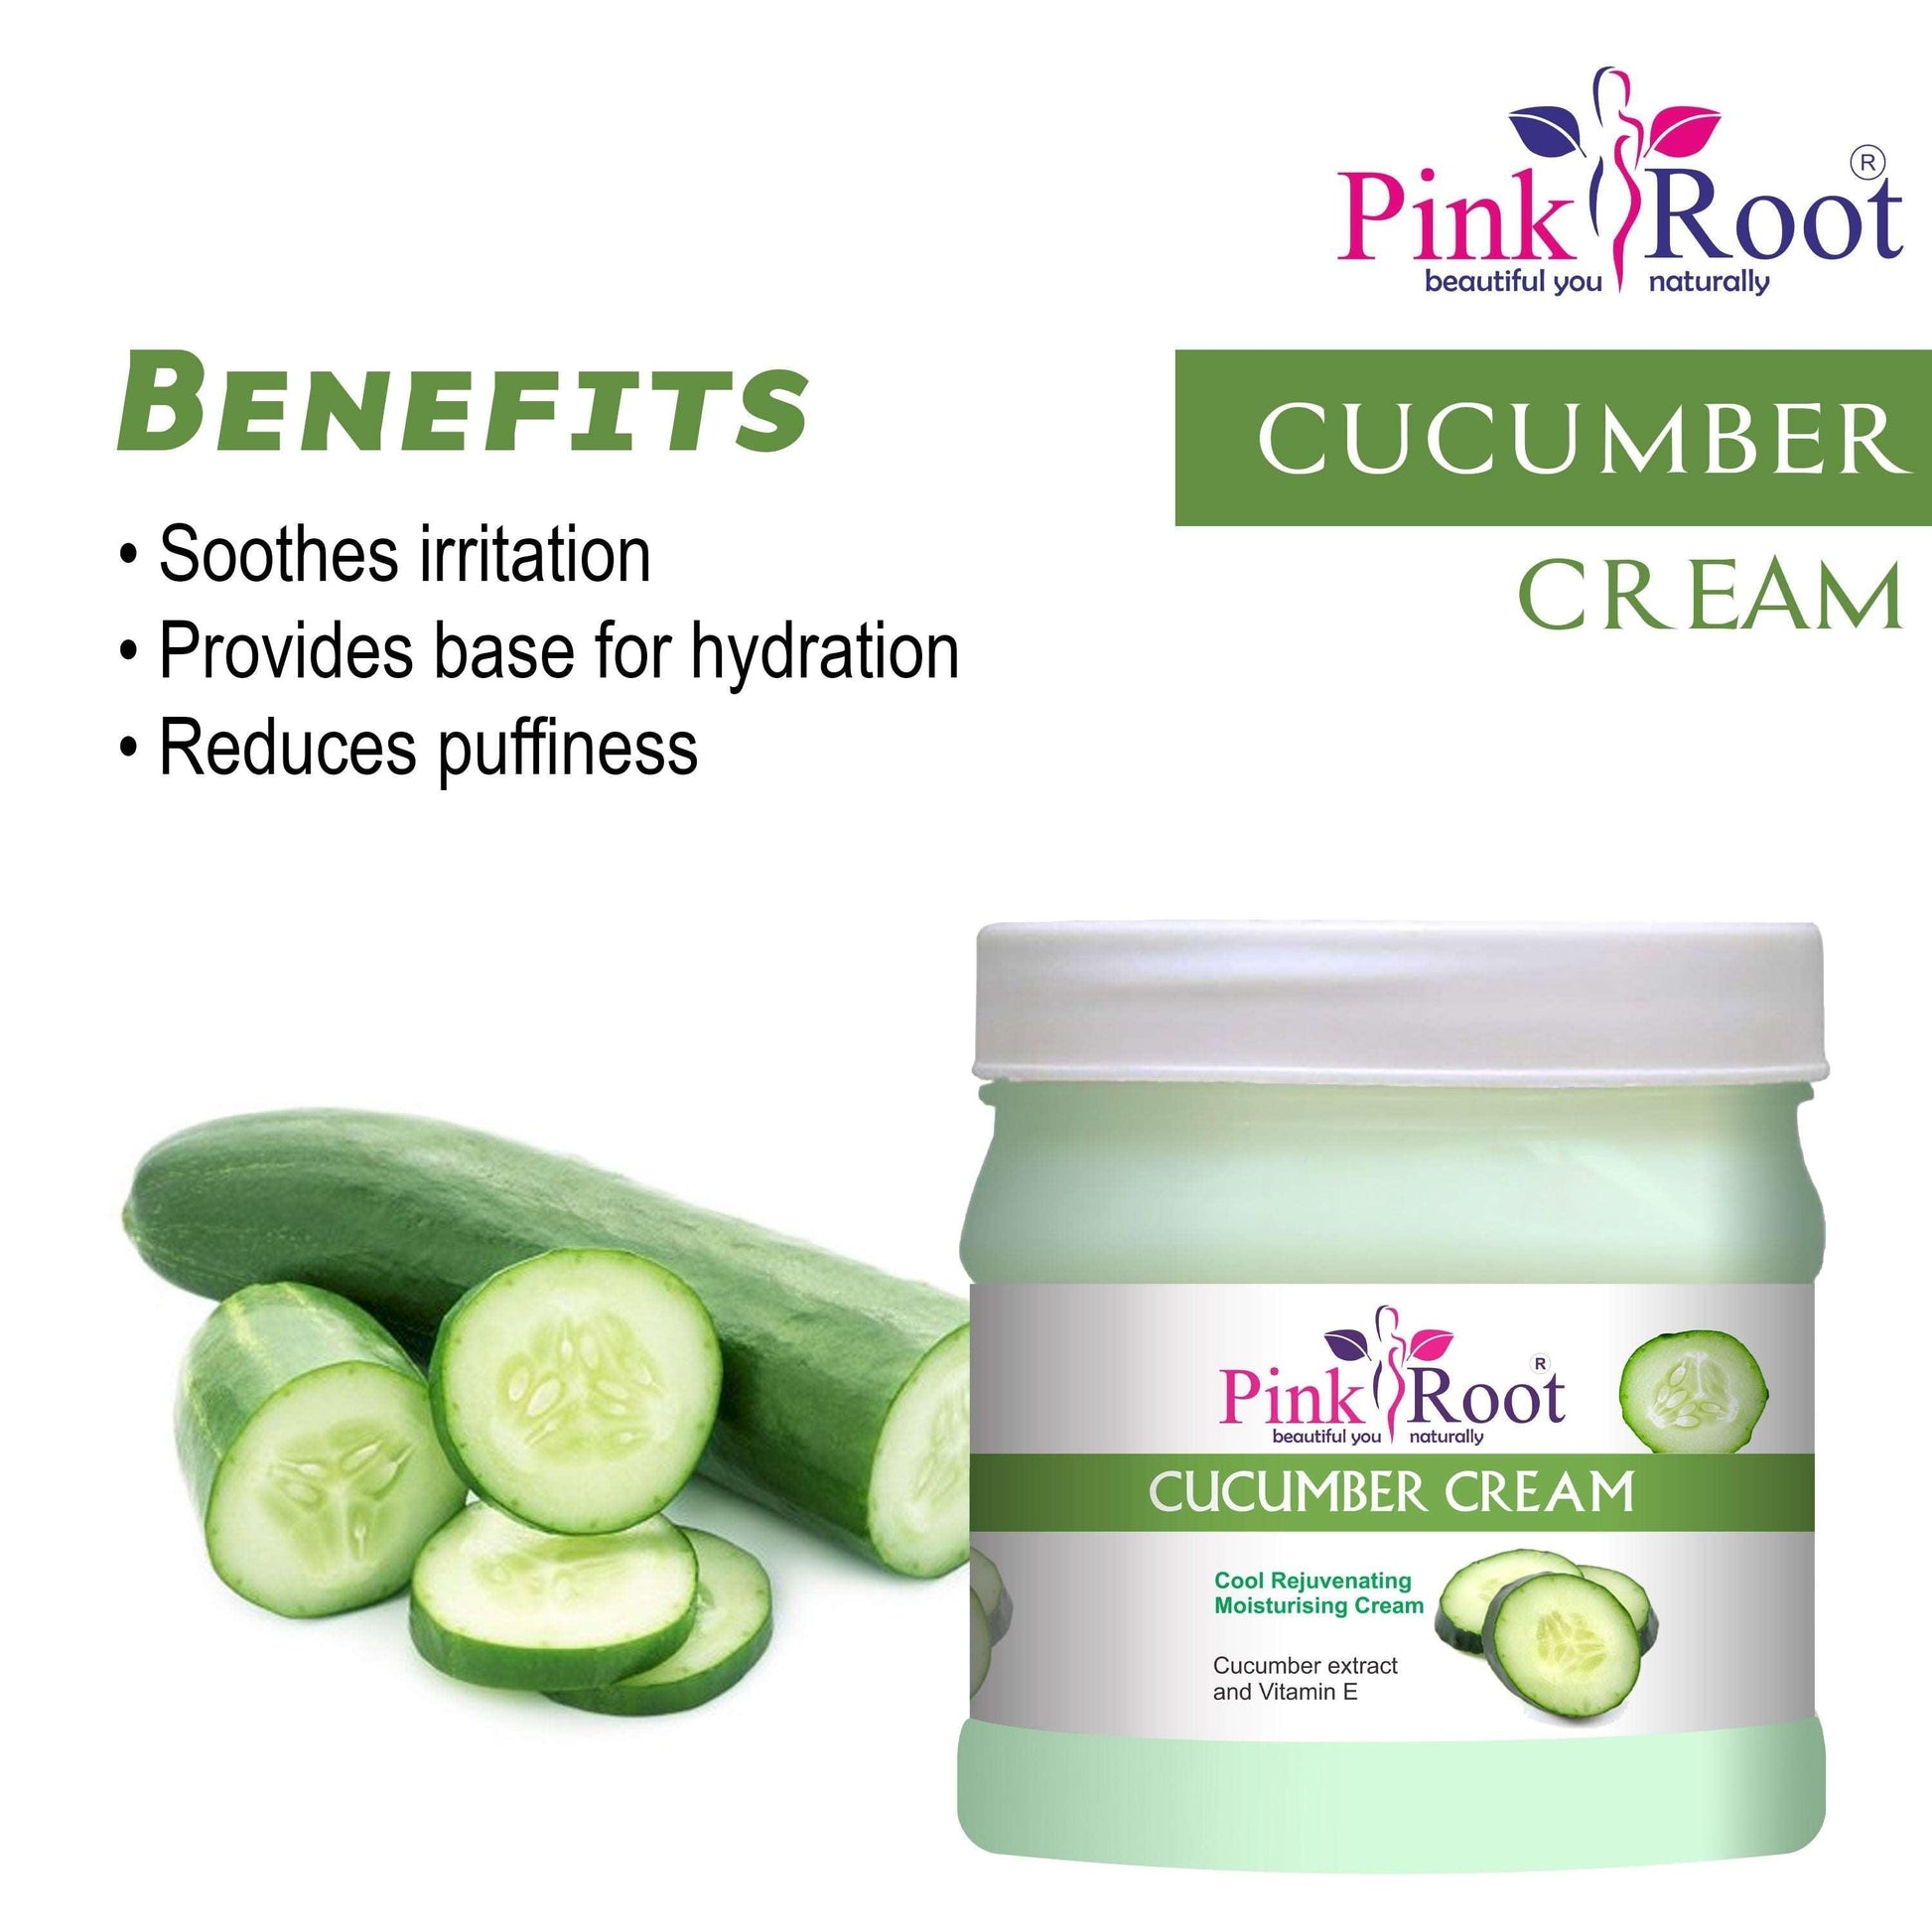 Cucumber Cream for Cool Rejuvenating Moisturizing Skin 500ml